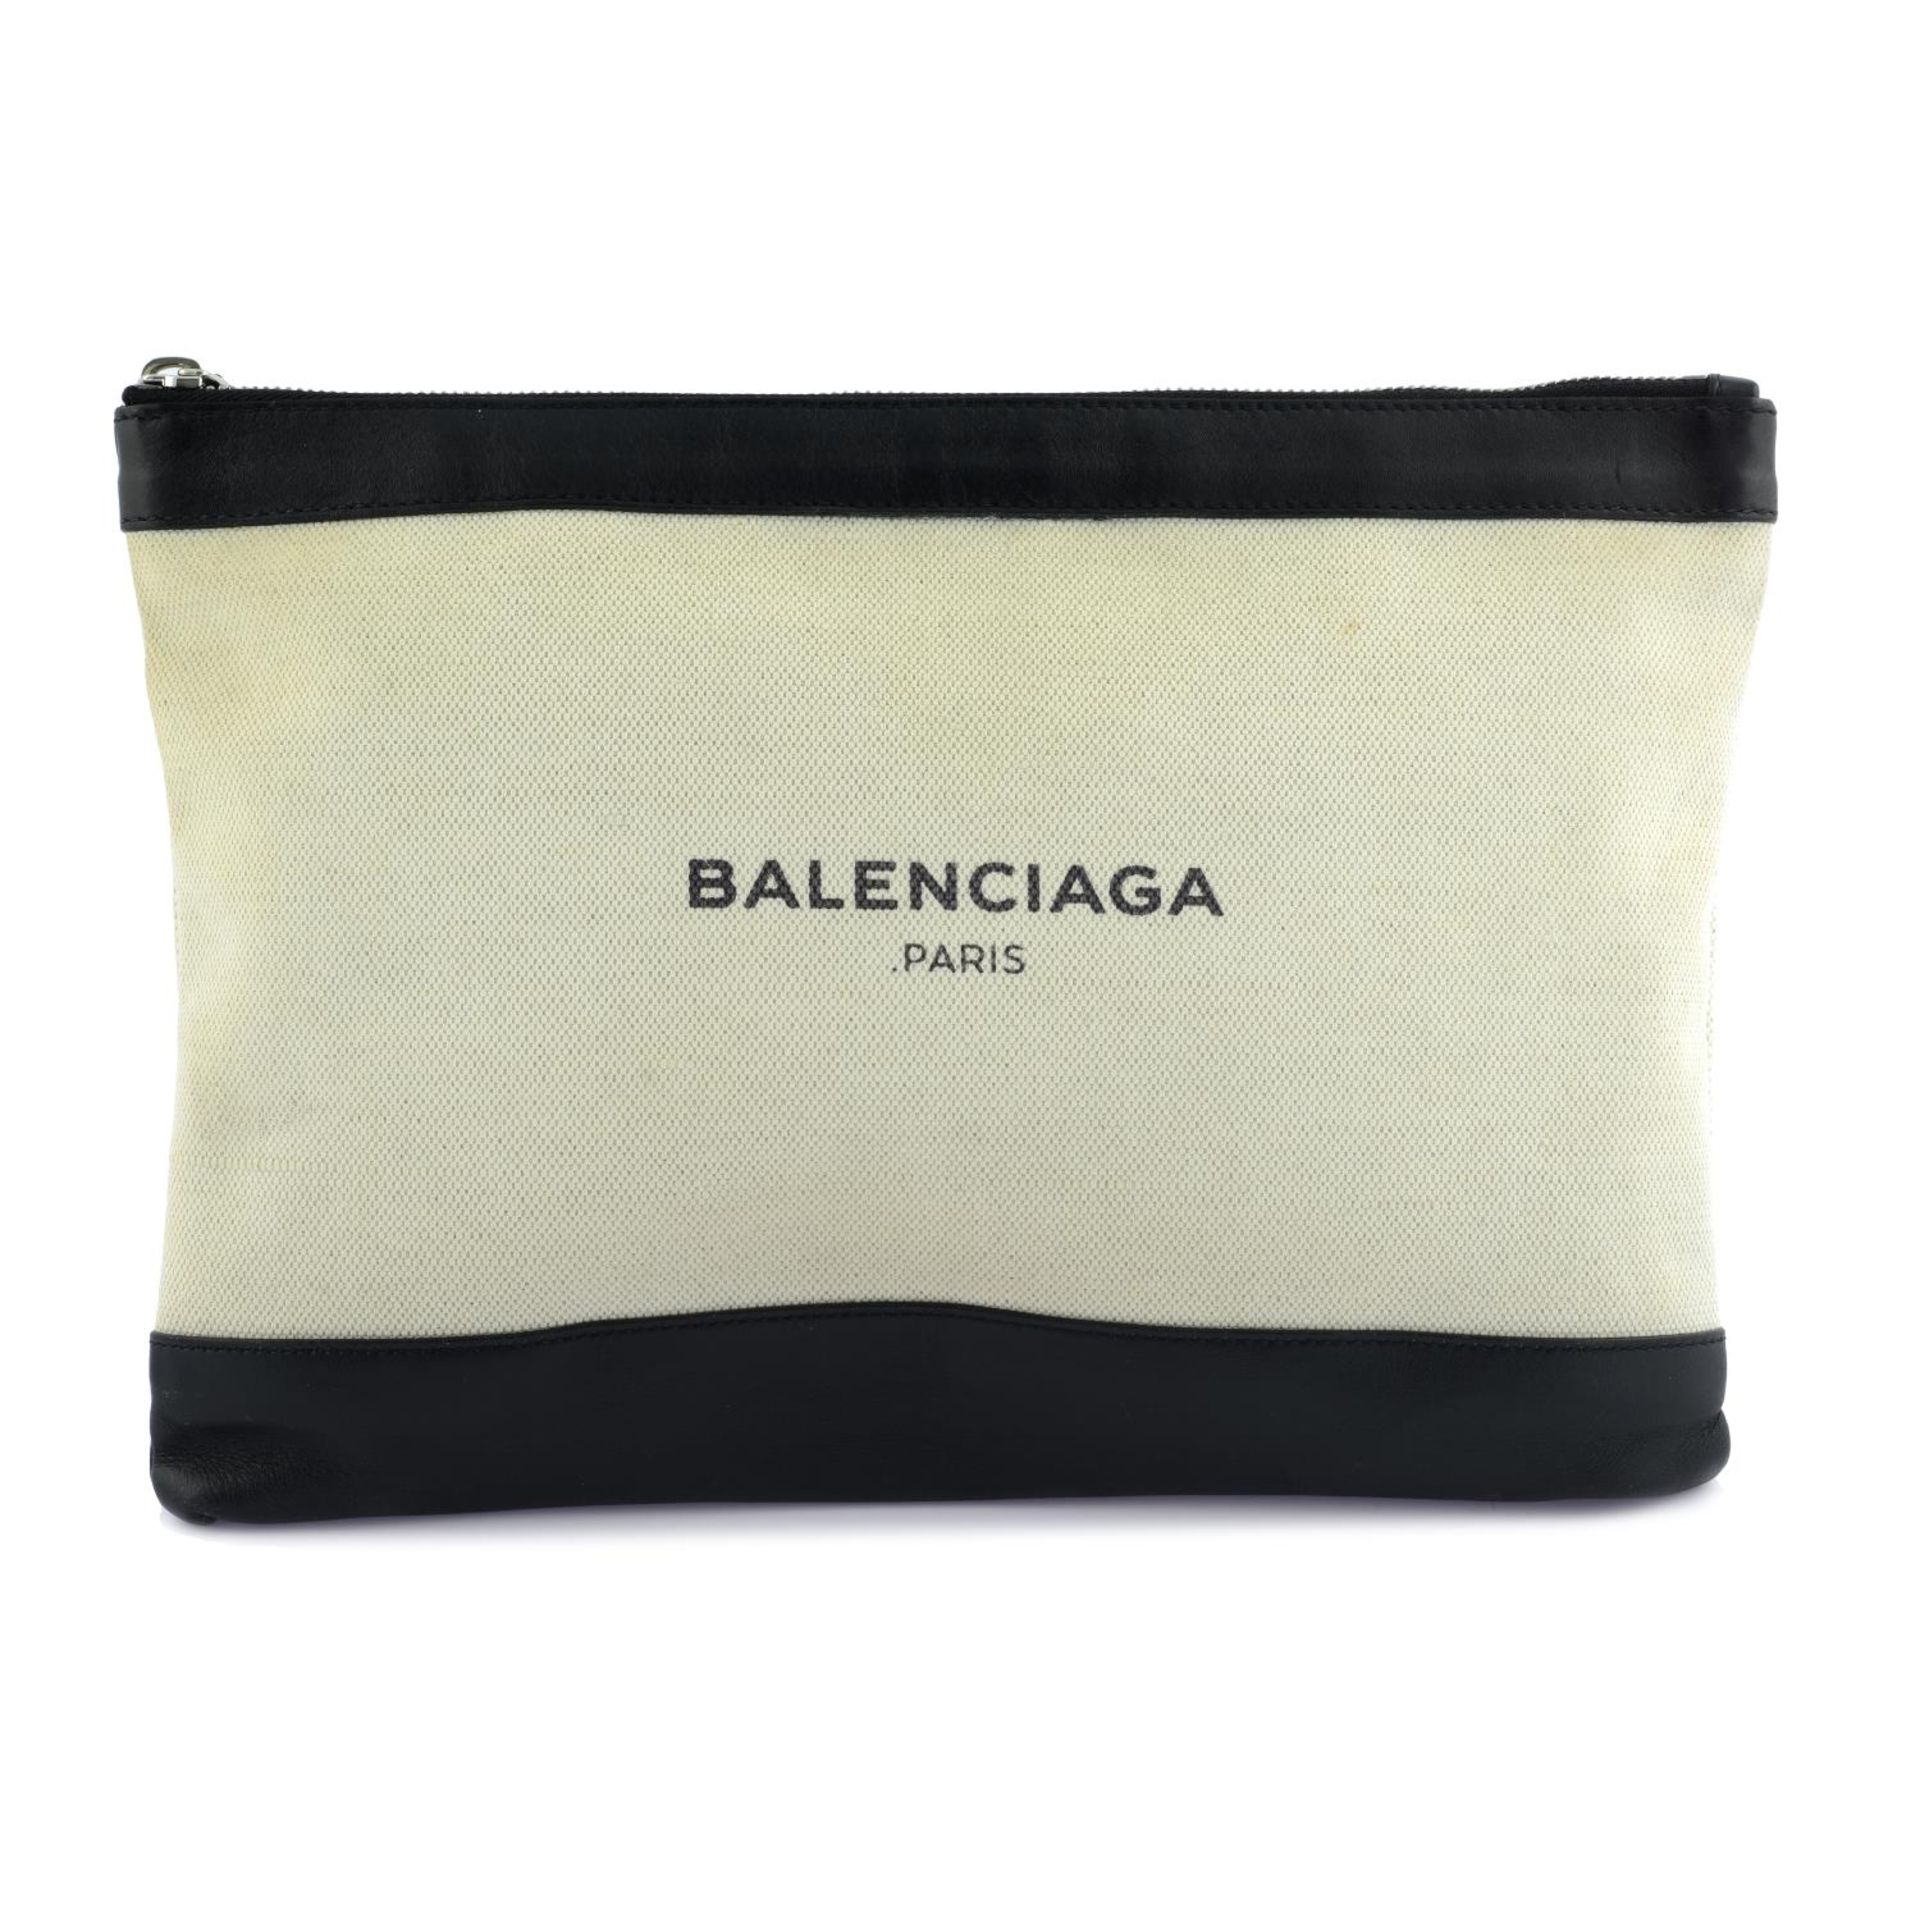 BALENCIAGA - a canvas and leather clutch.